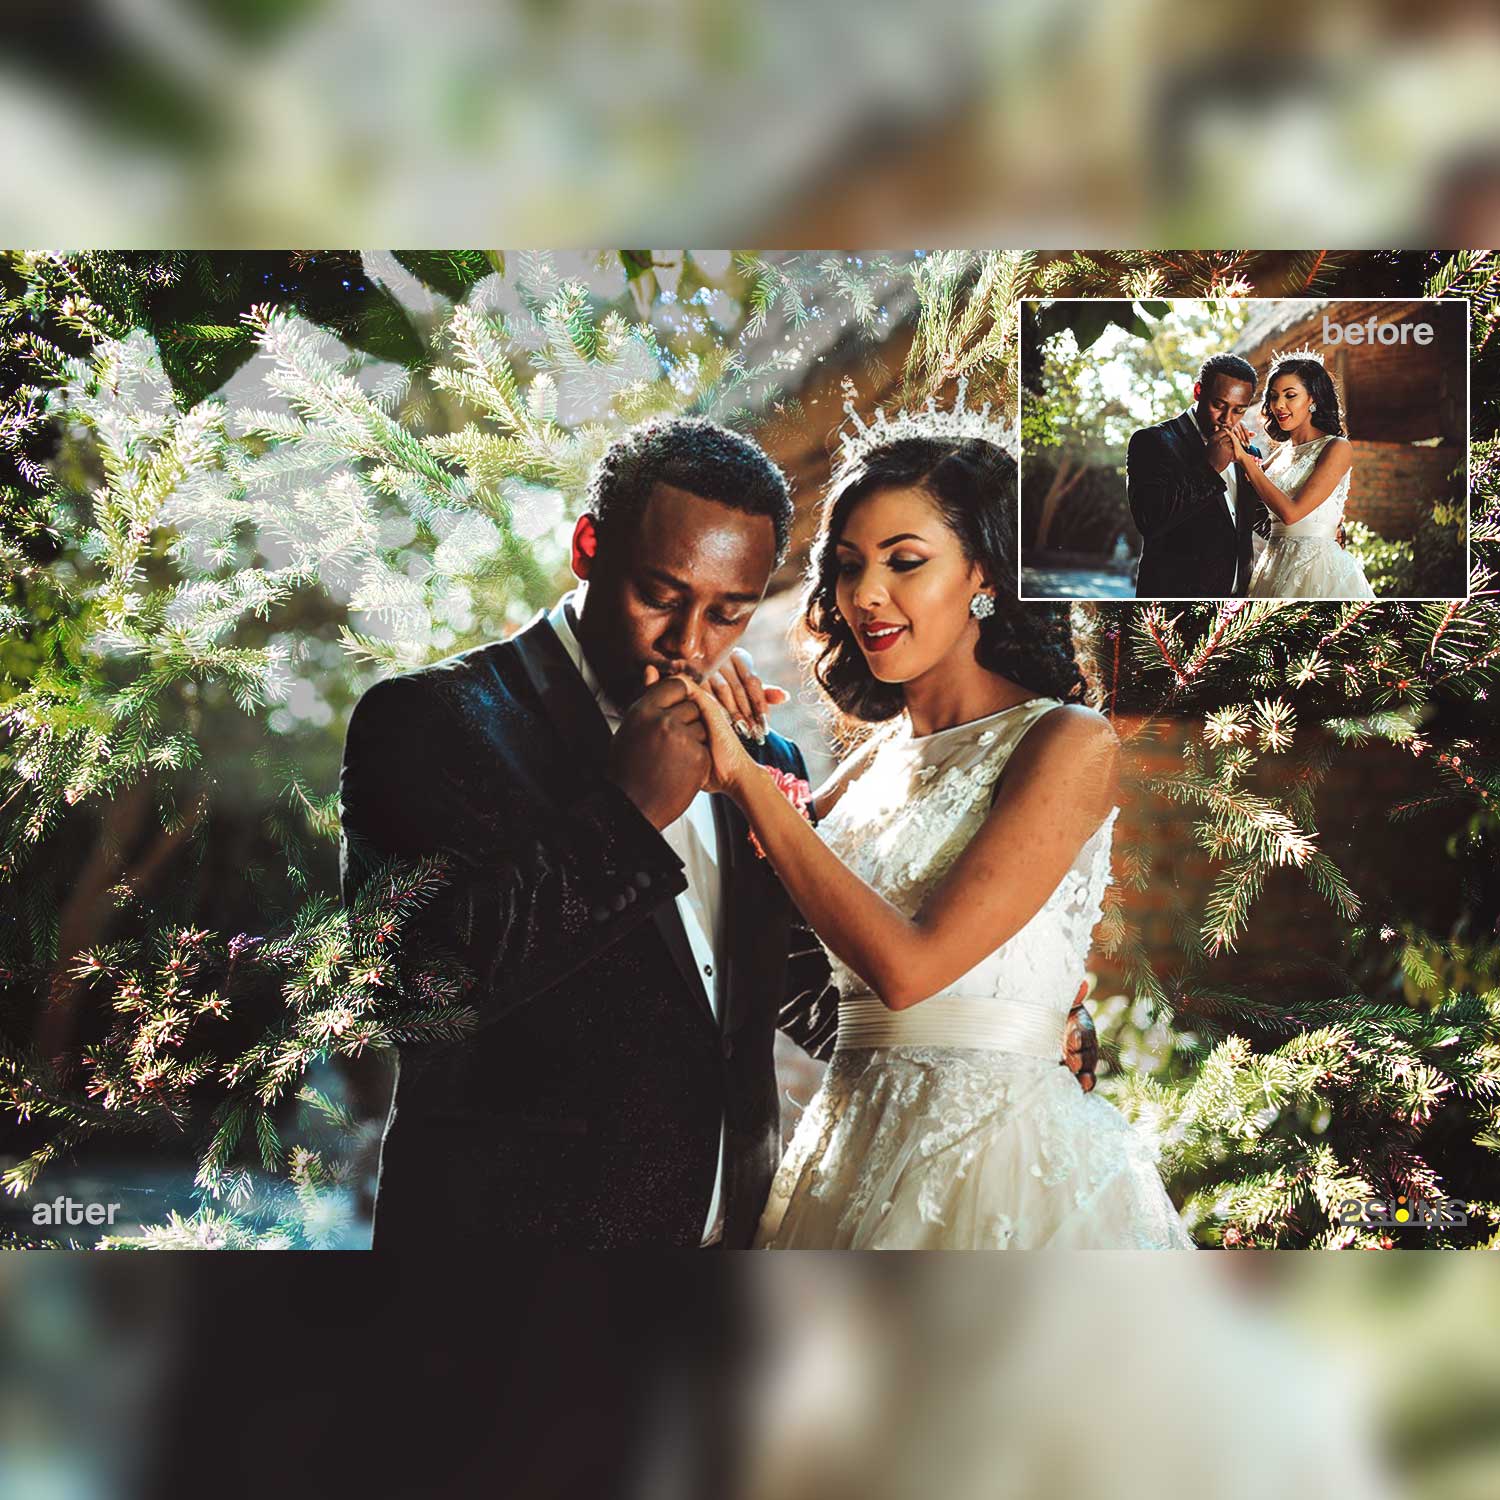 Spring Wood And Tree Photoshop Overlays Wedding Photo Example.